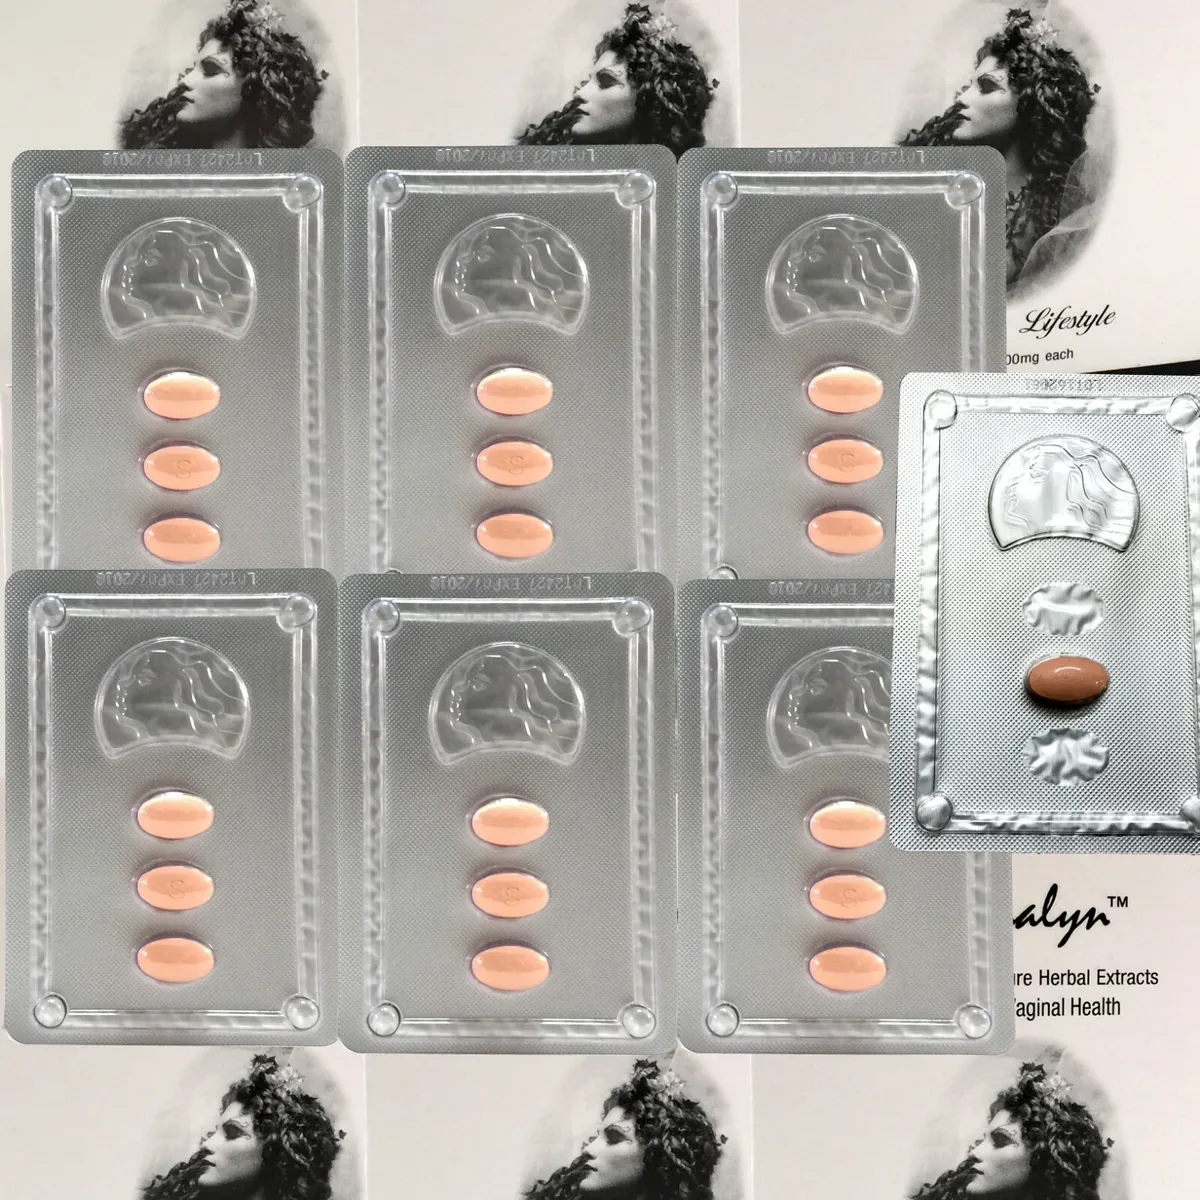 Xxx Hd Sanalyn Video - Sanalyn, A Natural Feminine Health Care Product, 500mg x 3 Tablets | eBay